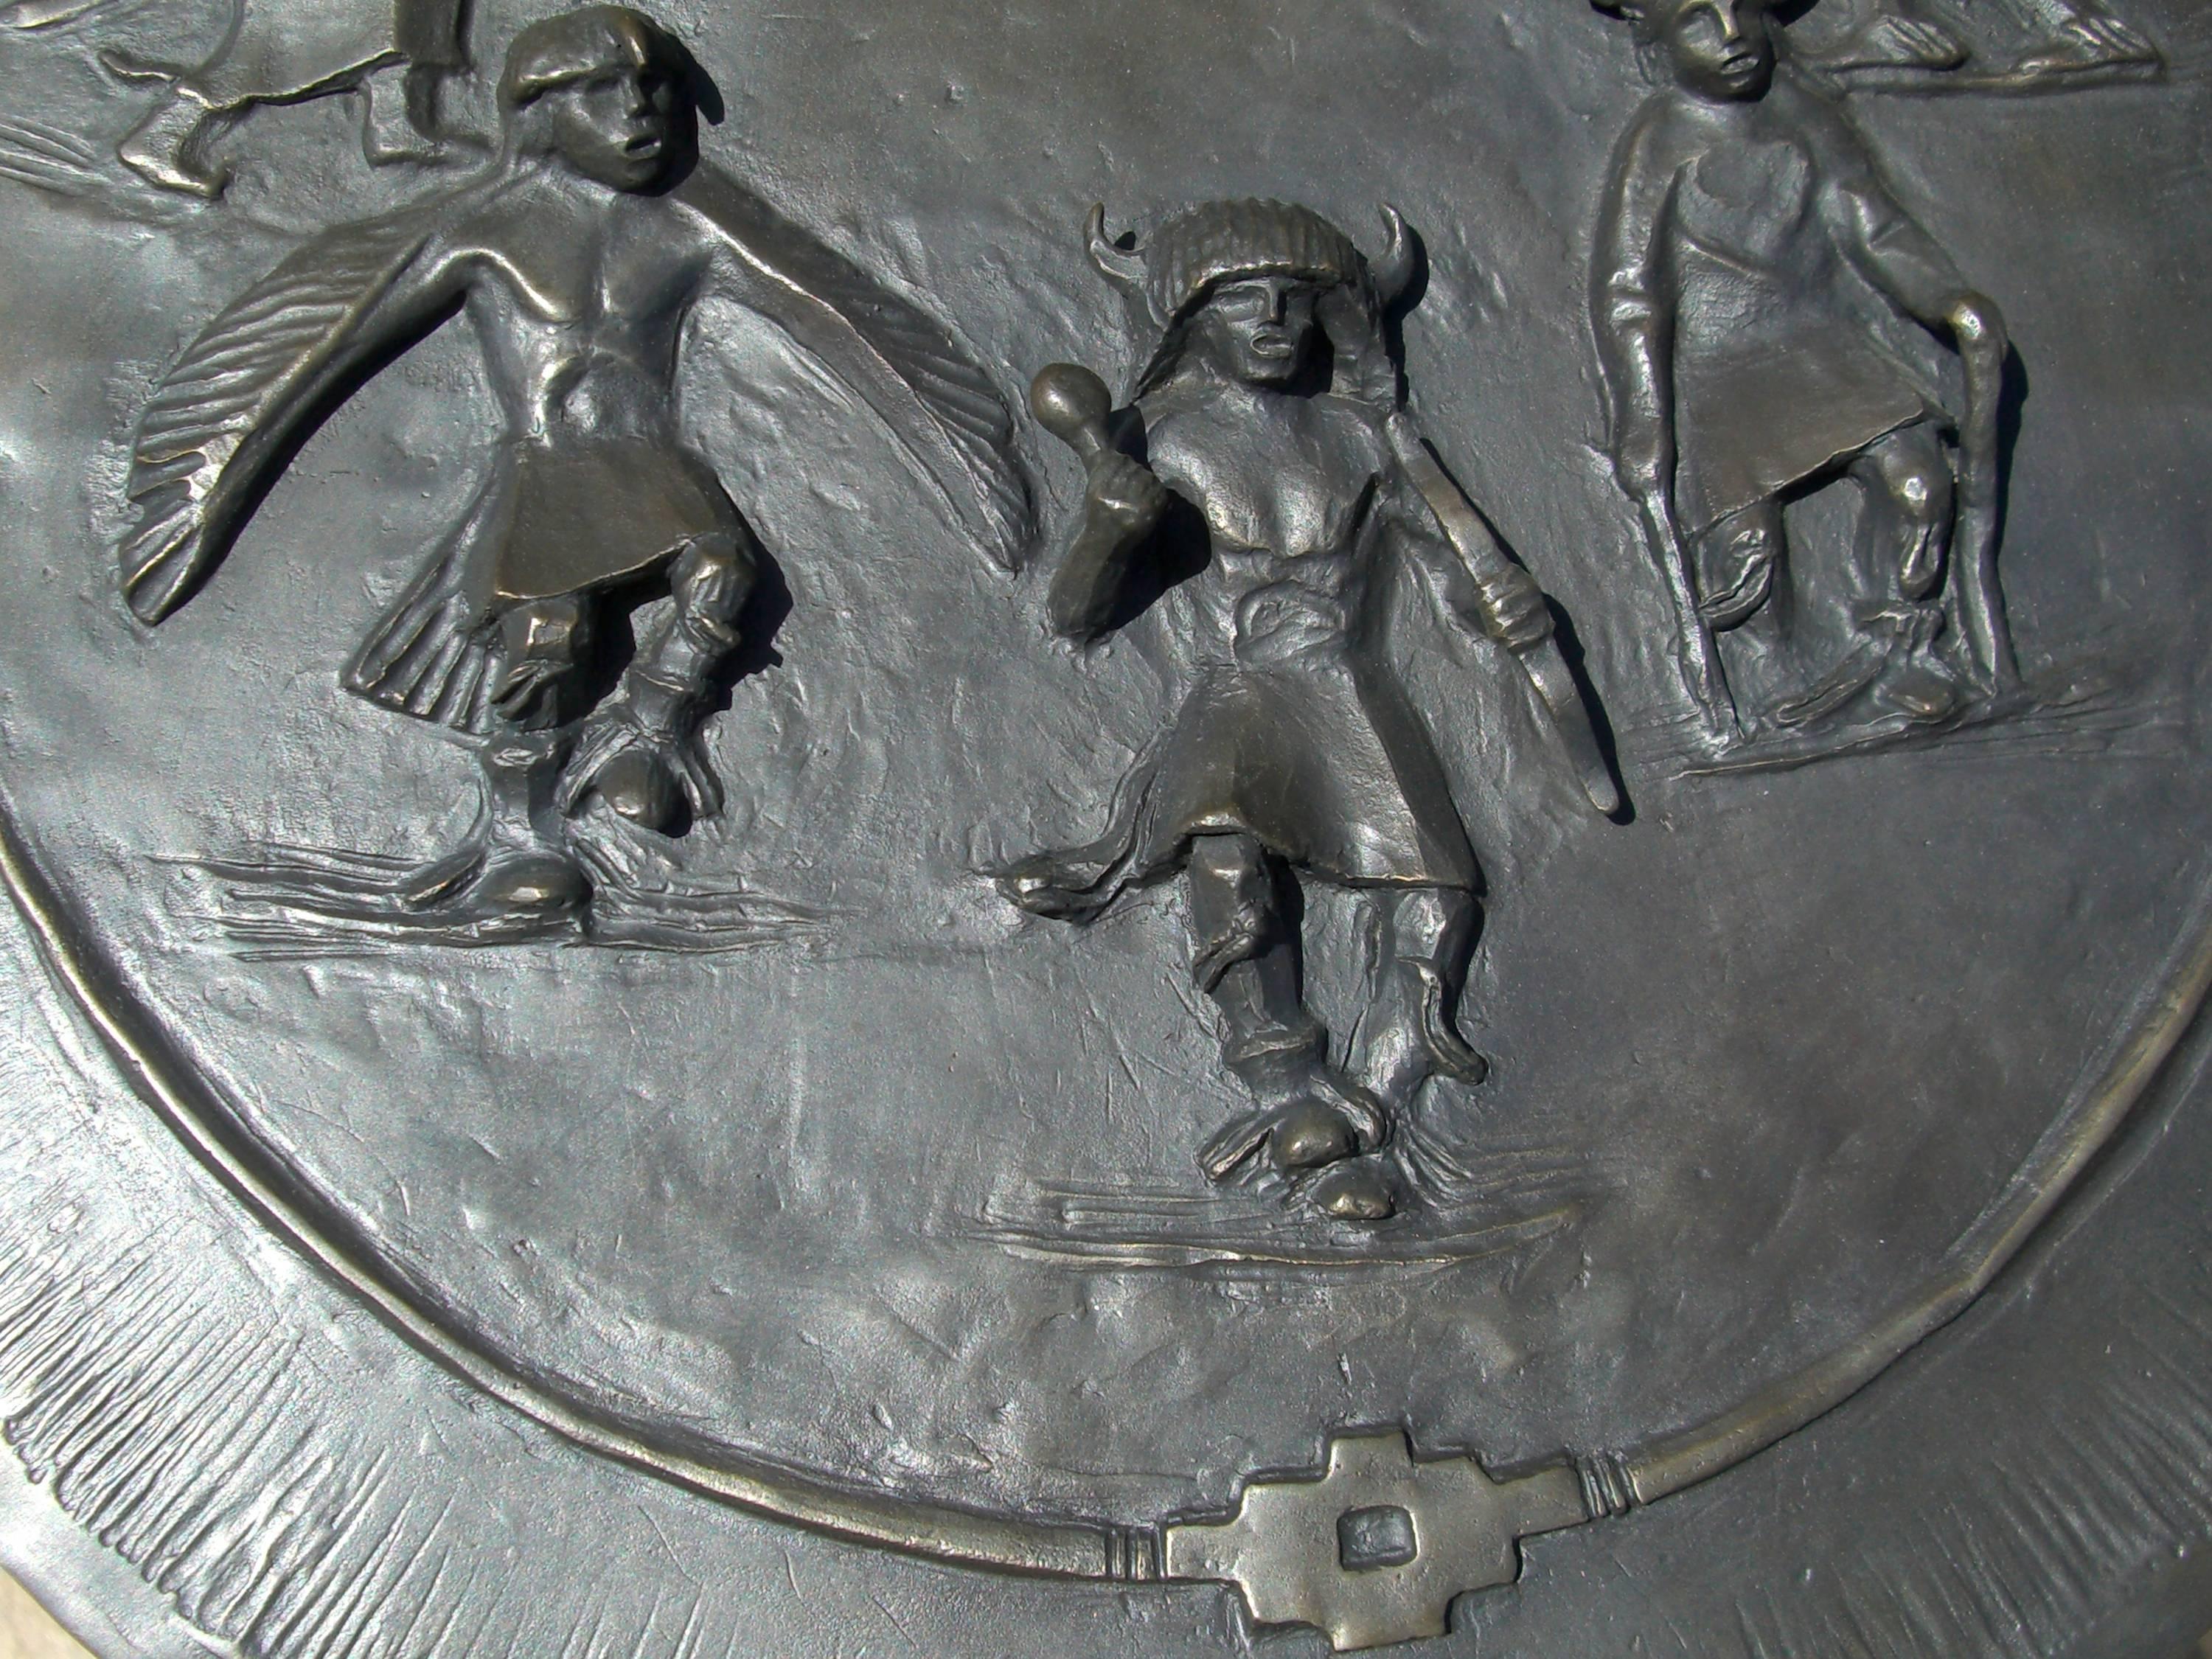 Southwest Dance Shield, Allan Houser, relief, bronze, Contemporary Native art

Allan Houser
SOUTHWEST DANCE SHIELD
bronze edition 24 ©1976
14.5